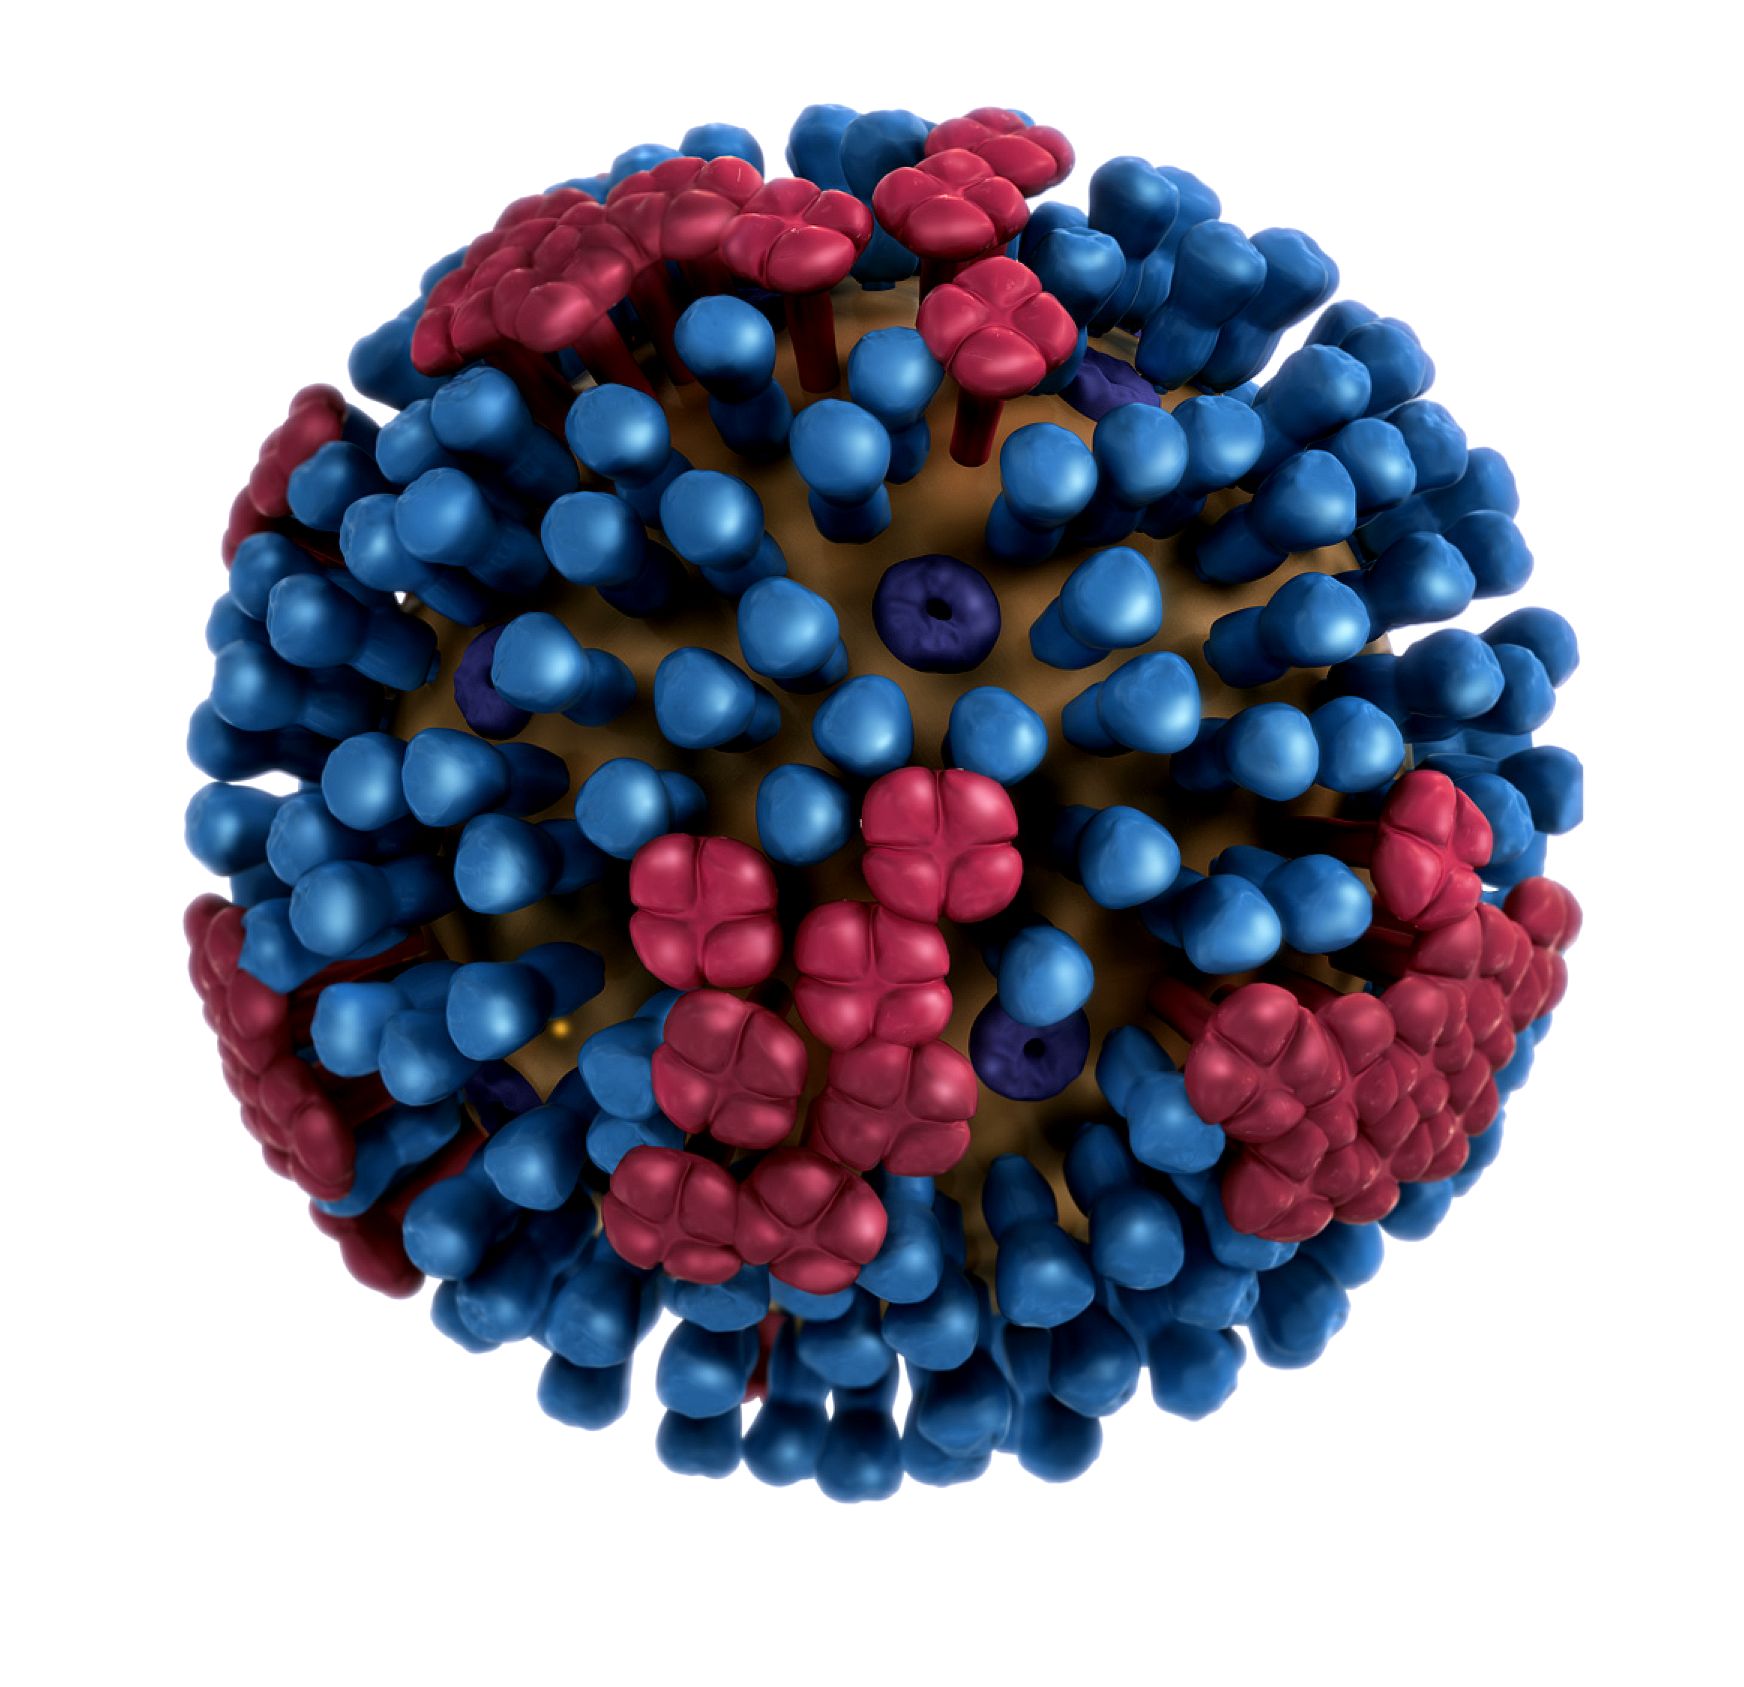 Influenza A virus subtype H1N1